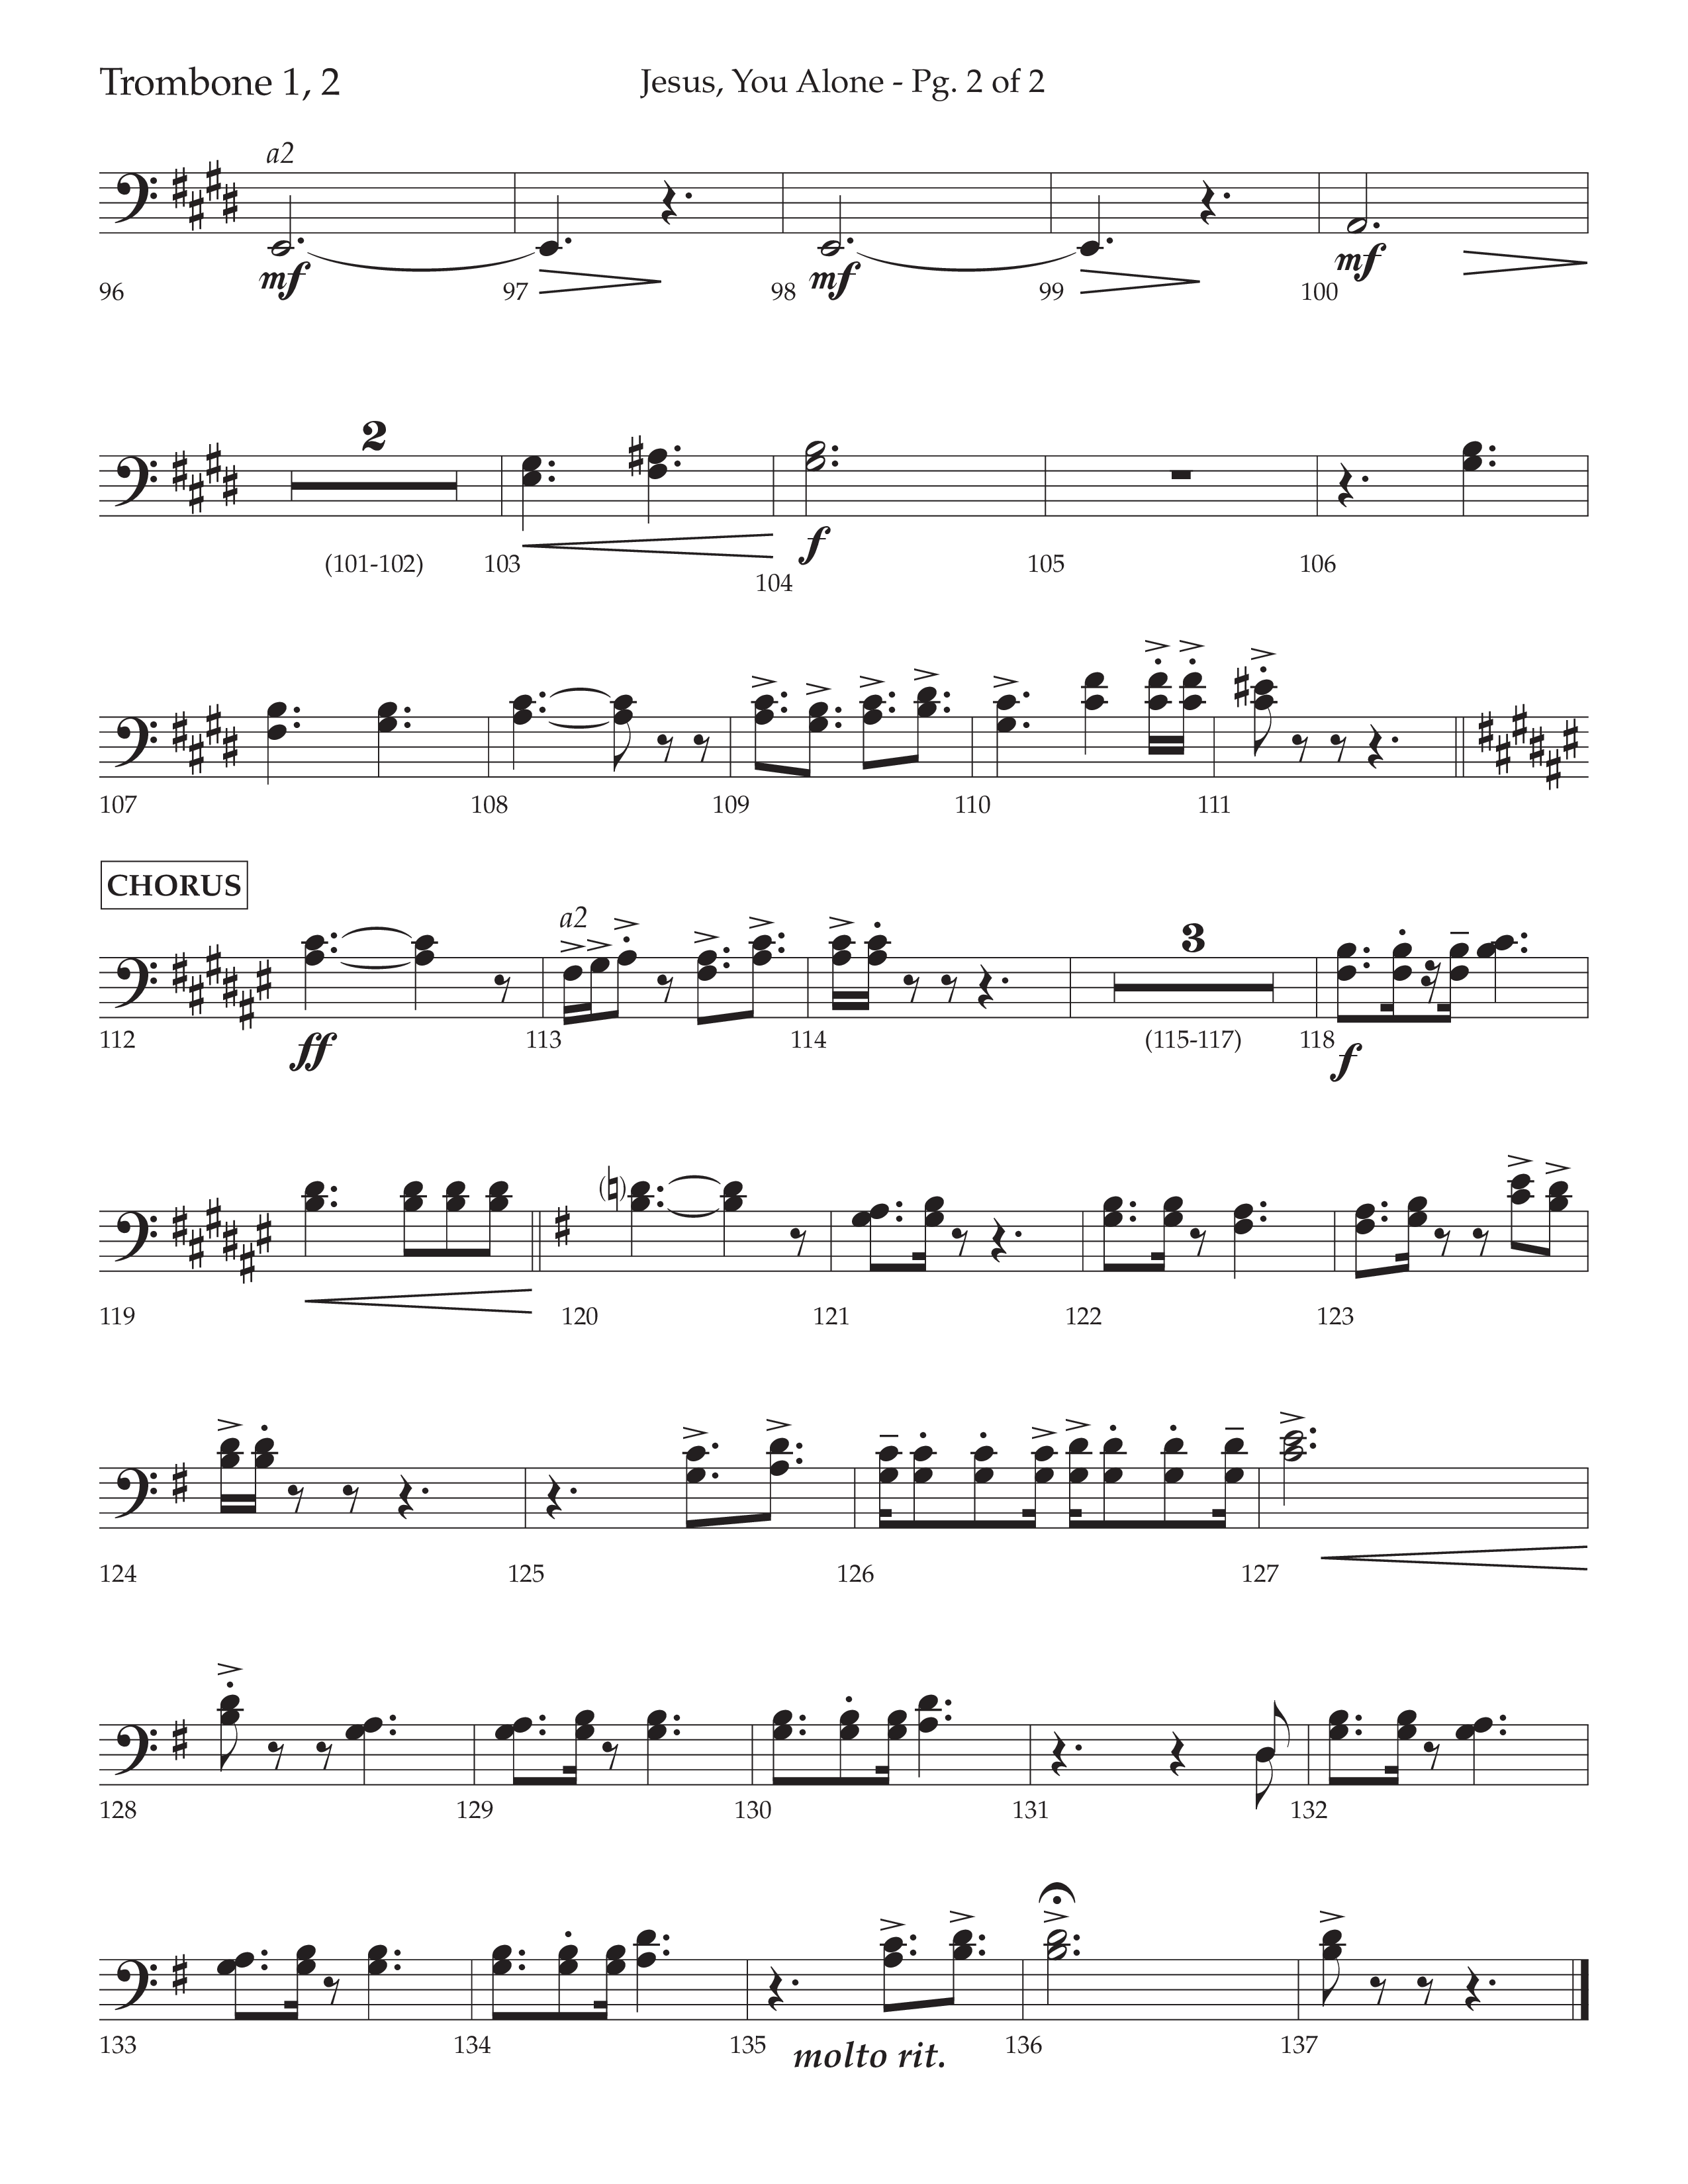 Jesus You Alone (Choral Anthem SATB) Trombone 1/2 (Lifeway Choral / Arr. David Wise / Orch. Bradley Knight)